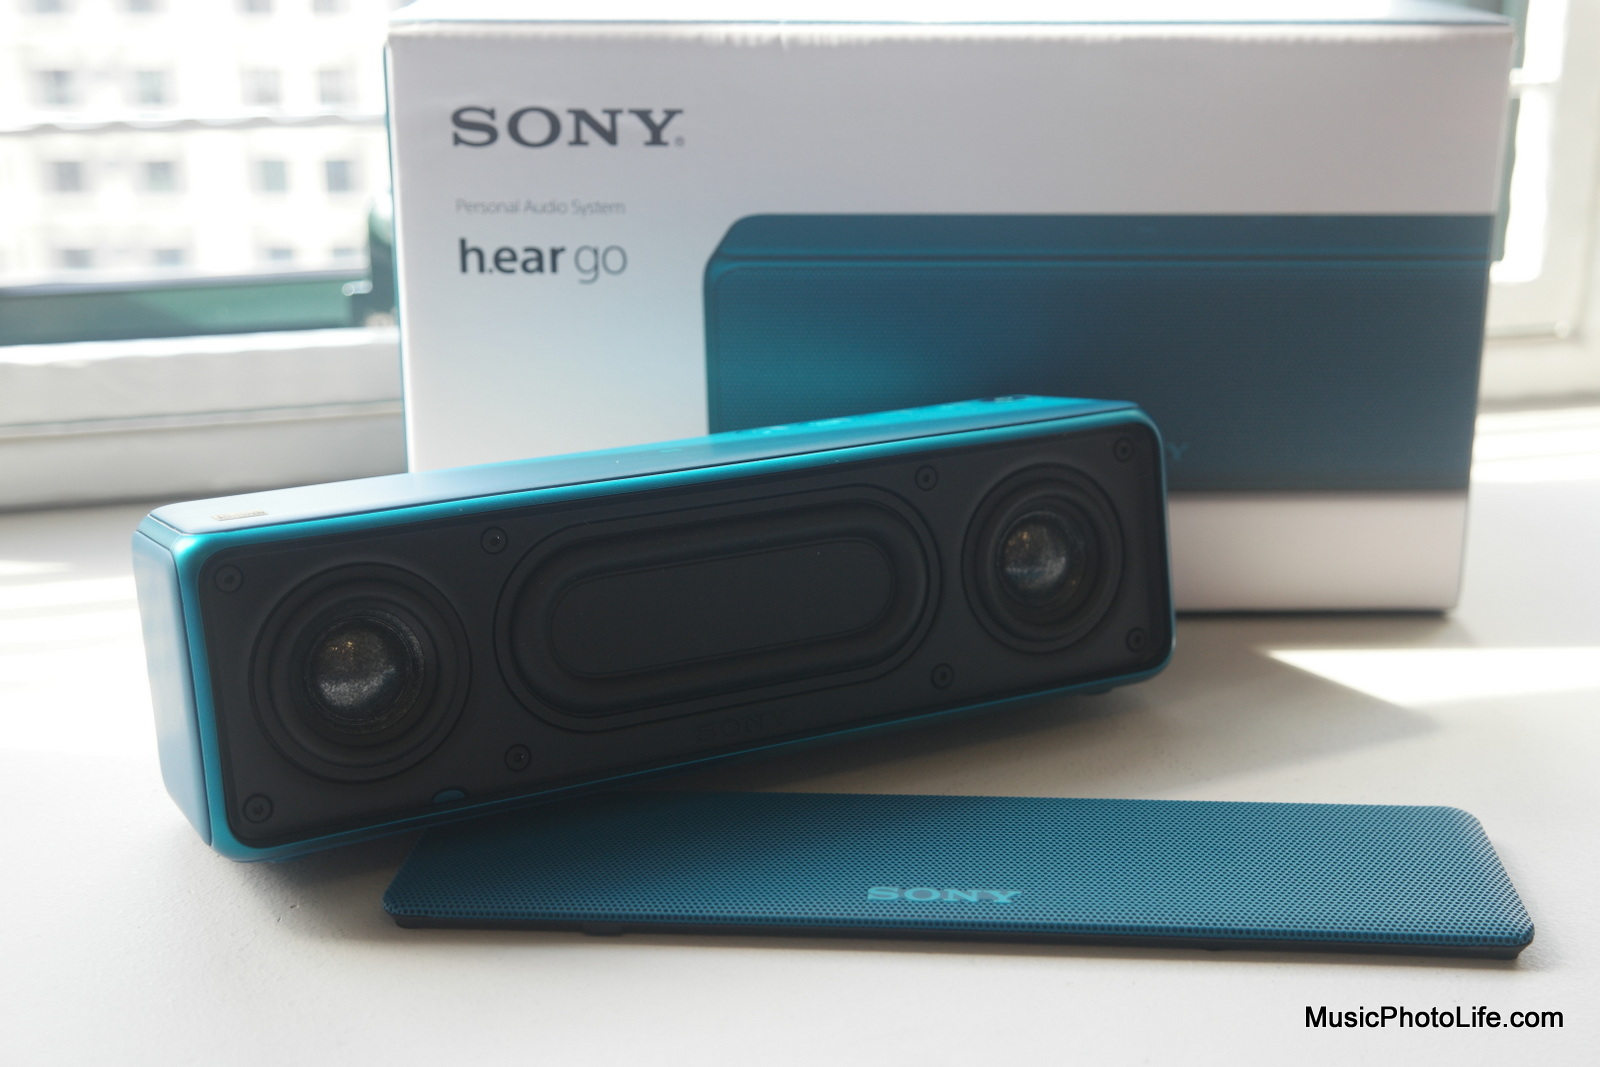 Sony SRS-HG1 Review: h.ear go Wireless Speaker